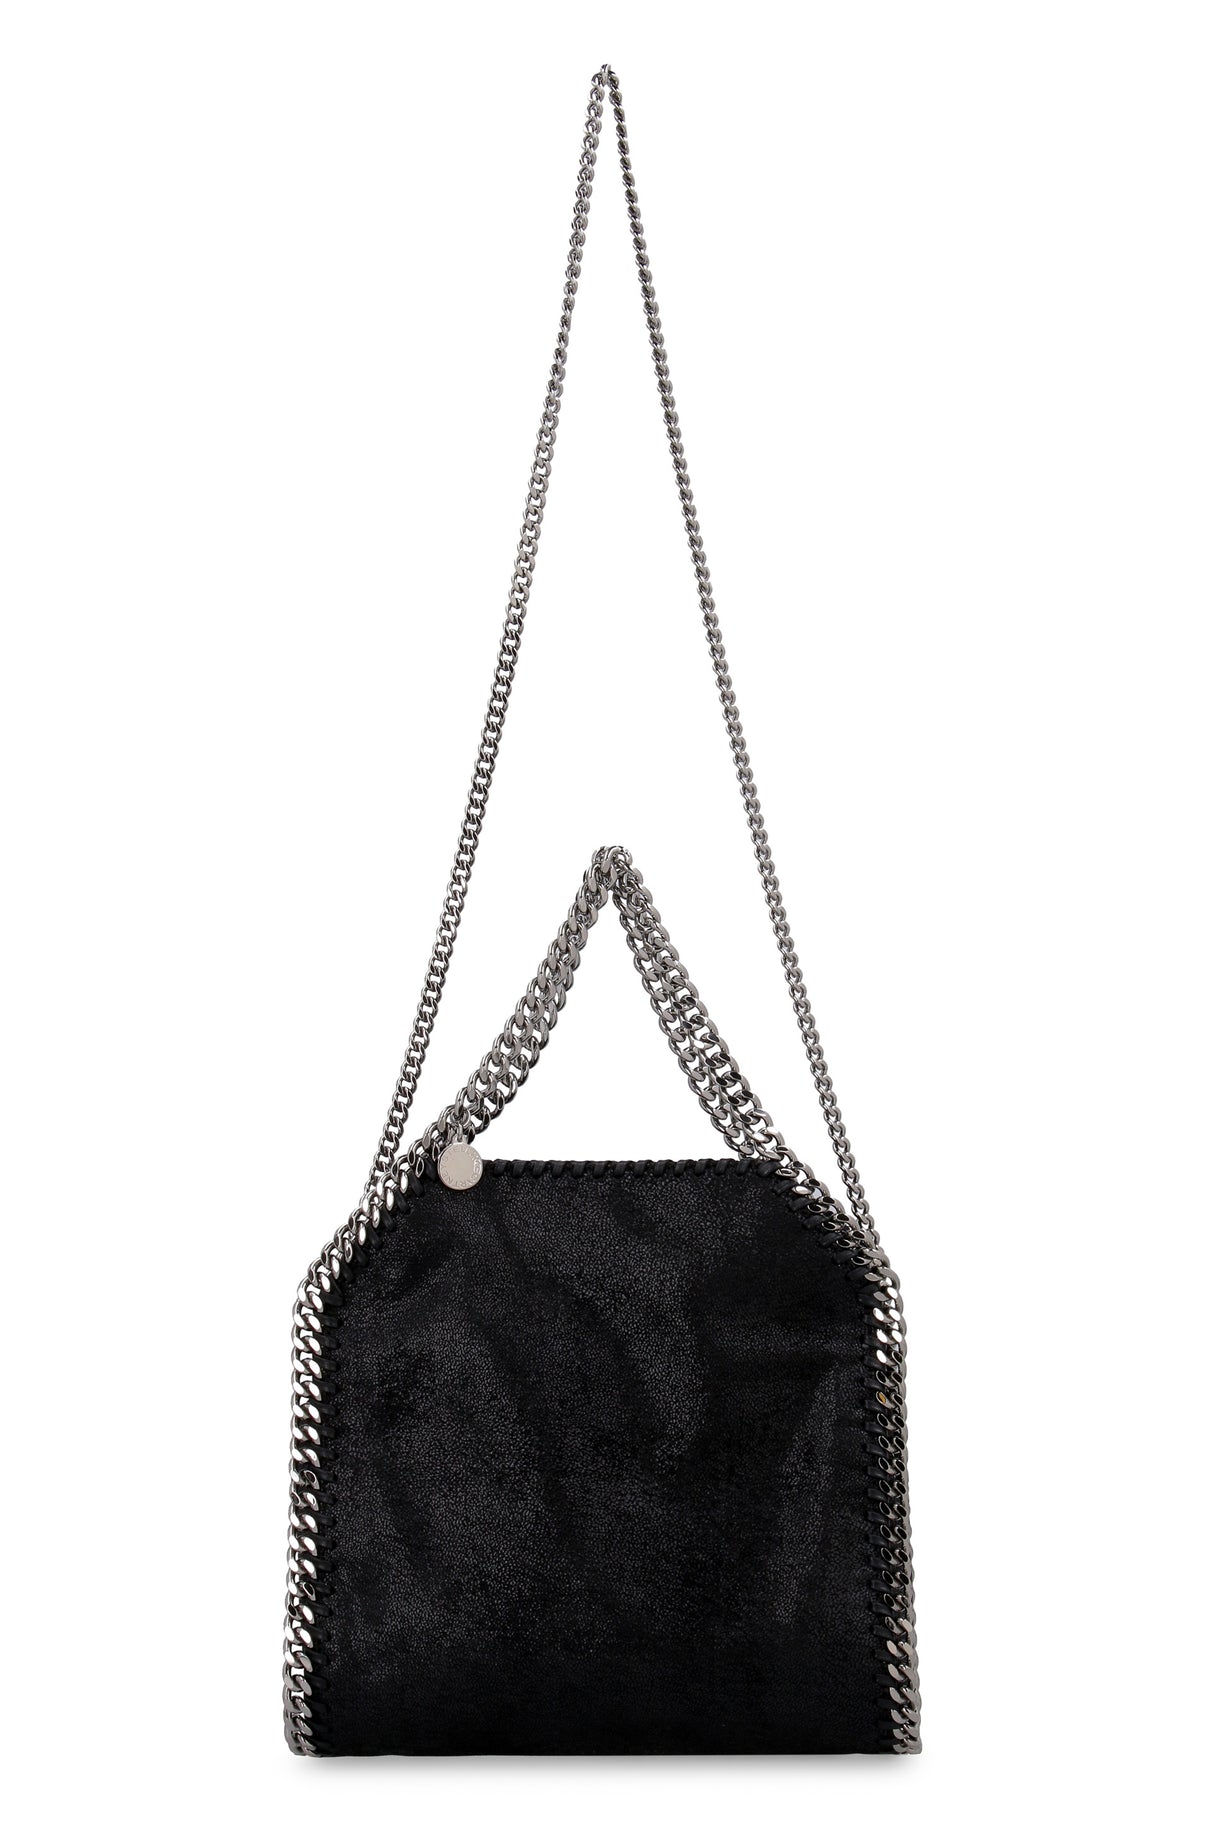 Black Portable Tote Bag by Stella McCartney